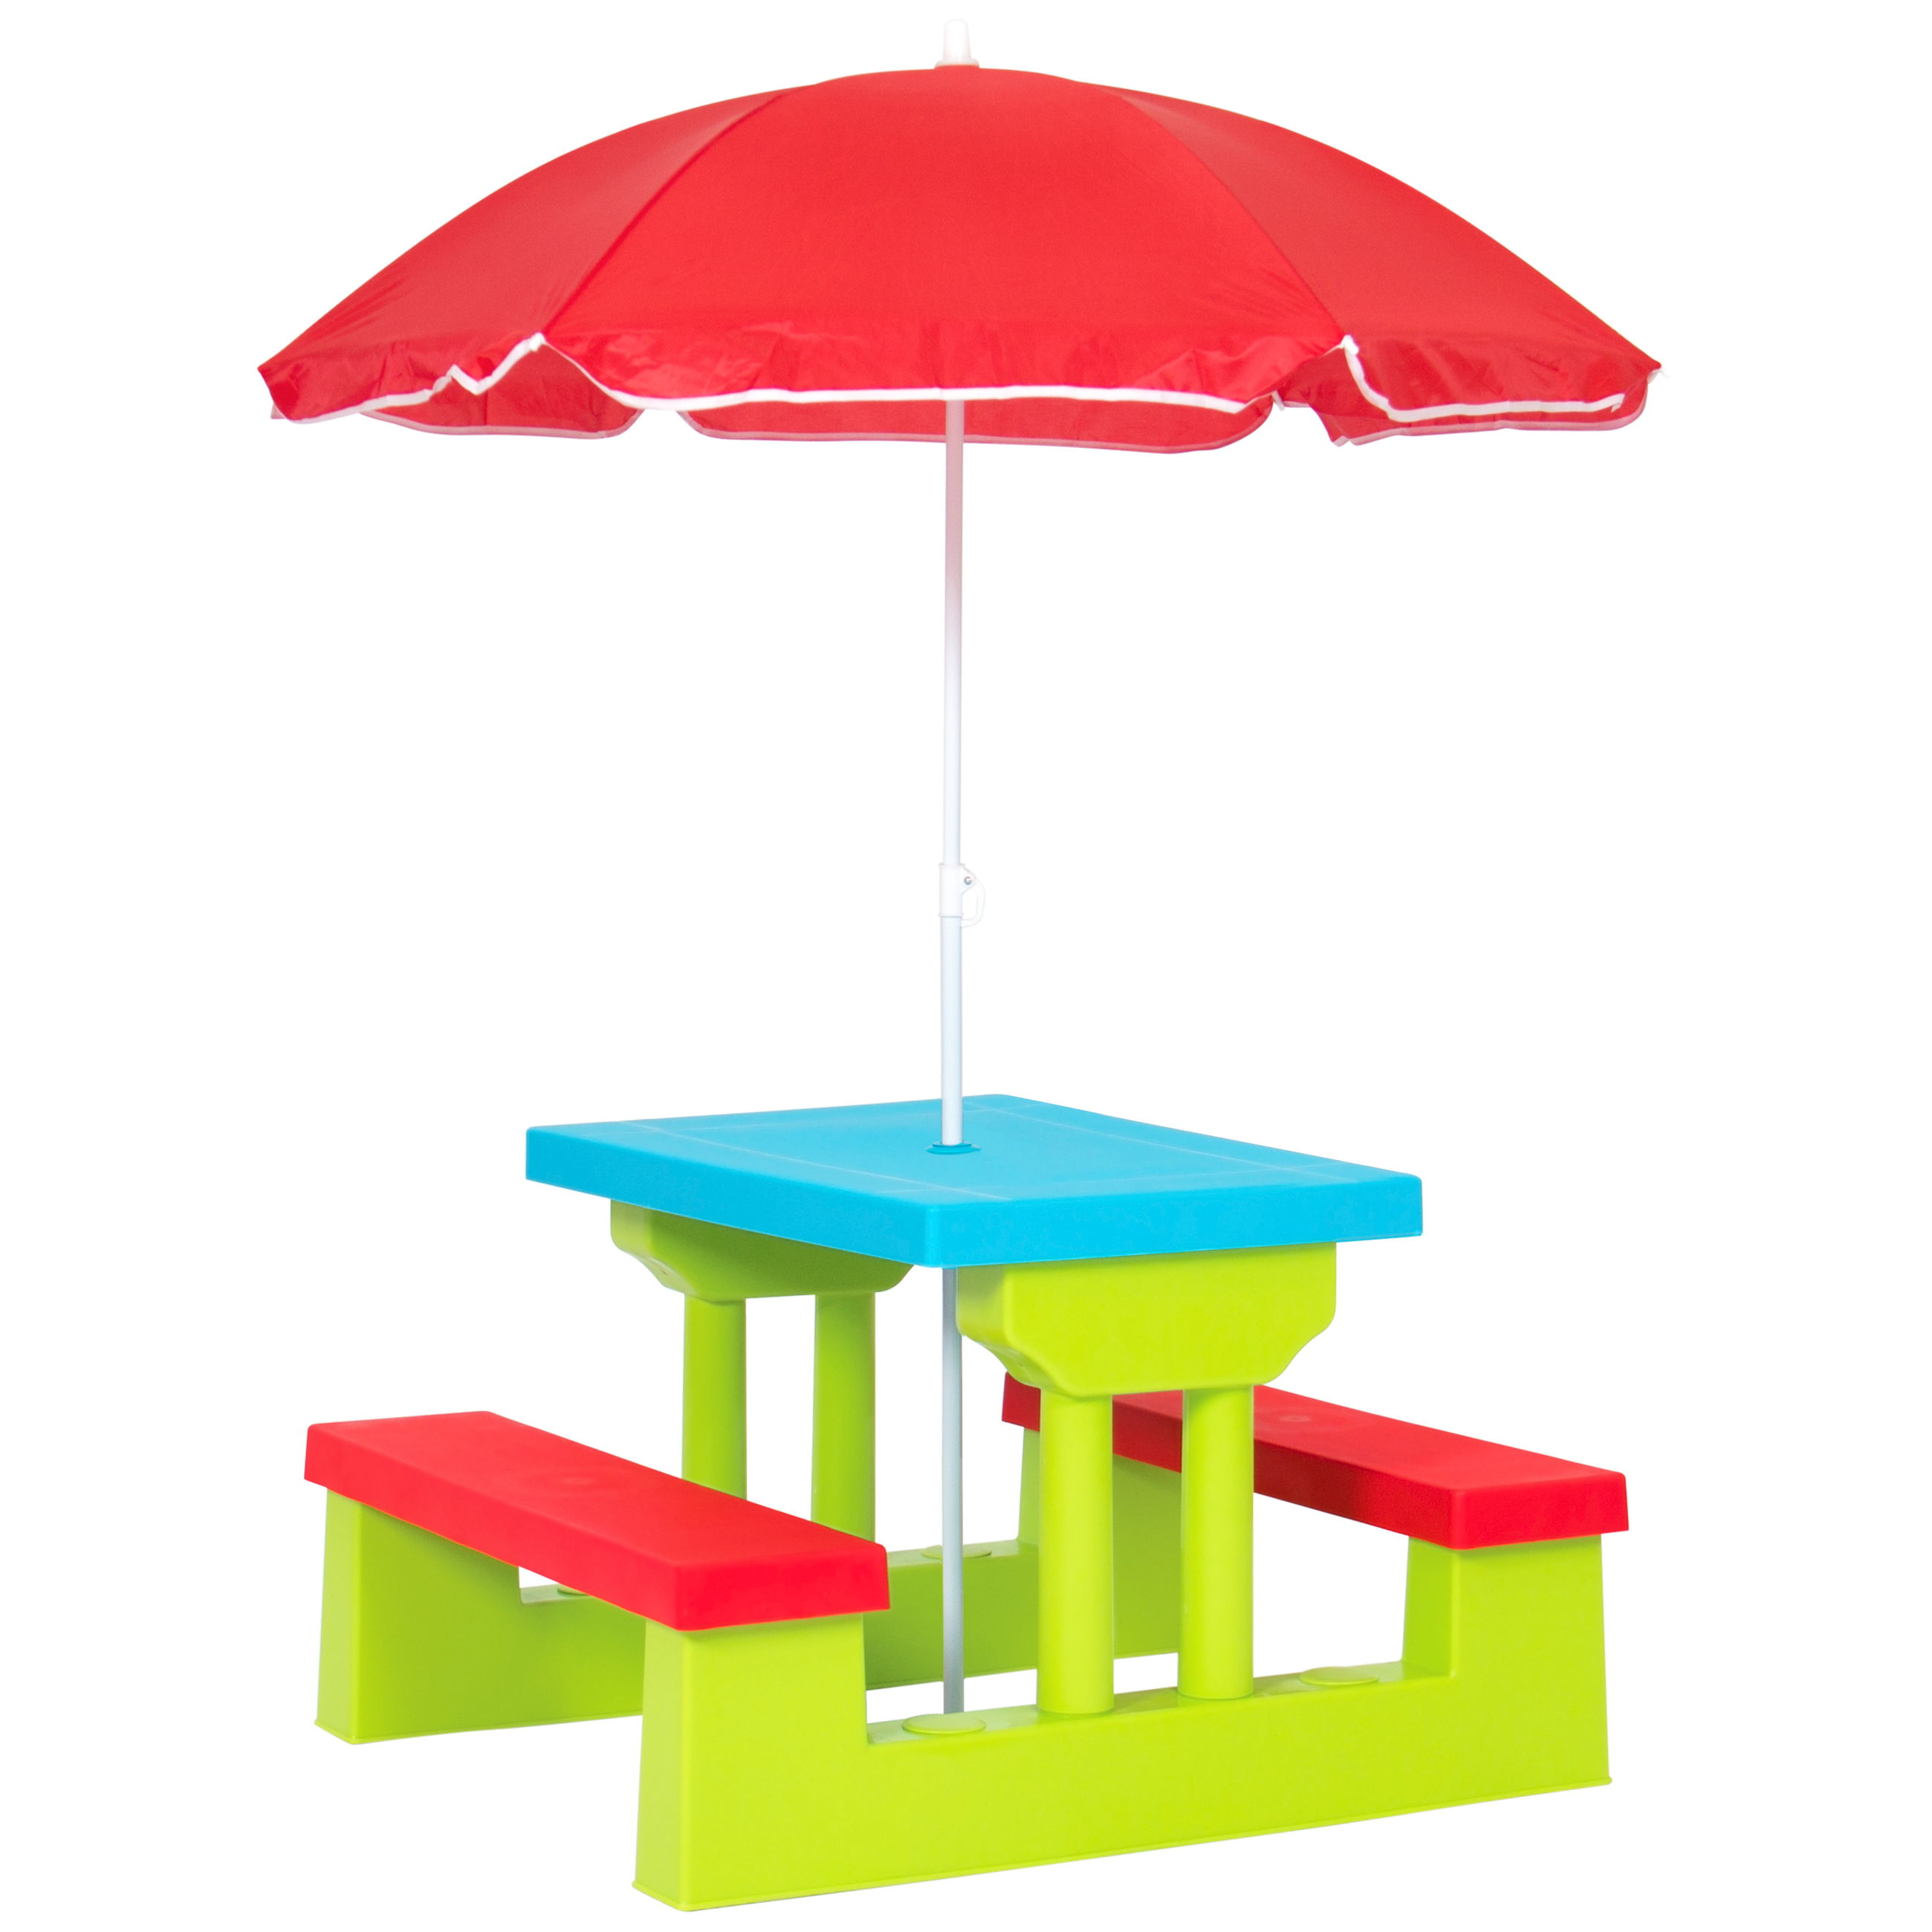 kids garden furniture best choice products kids garden table bench with umbrella- multicolor DVXFZXK